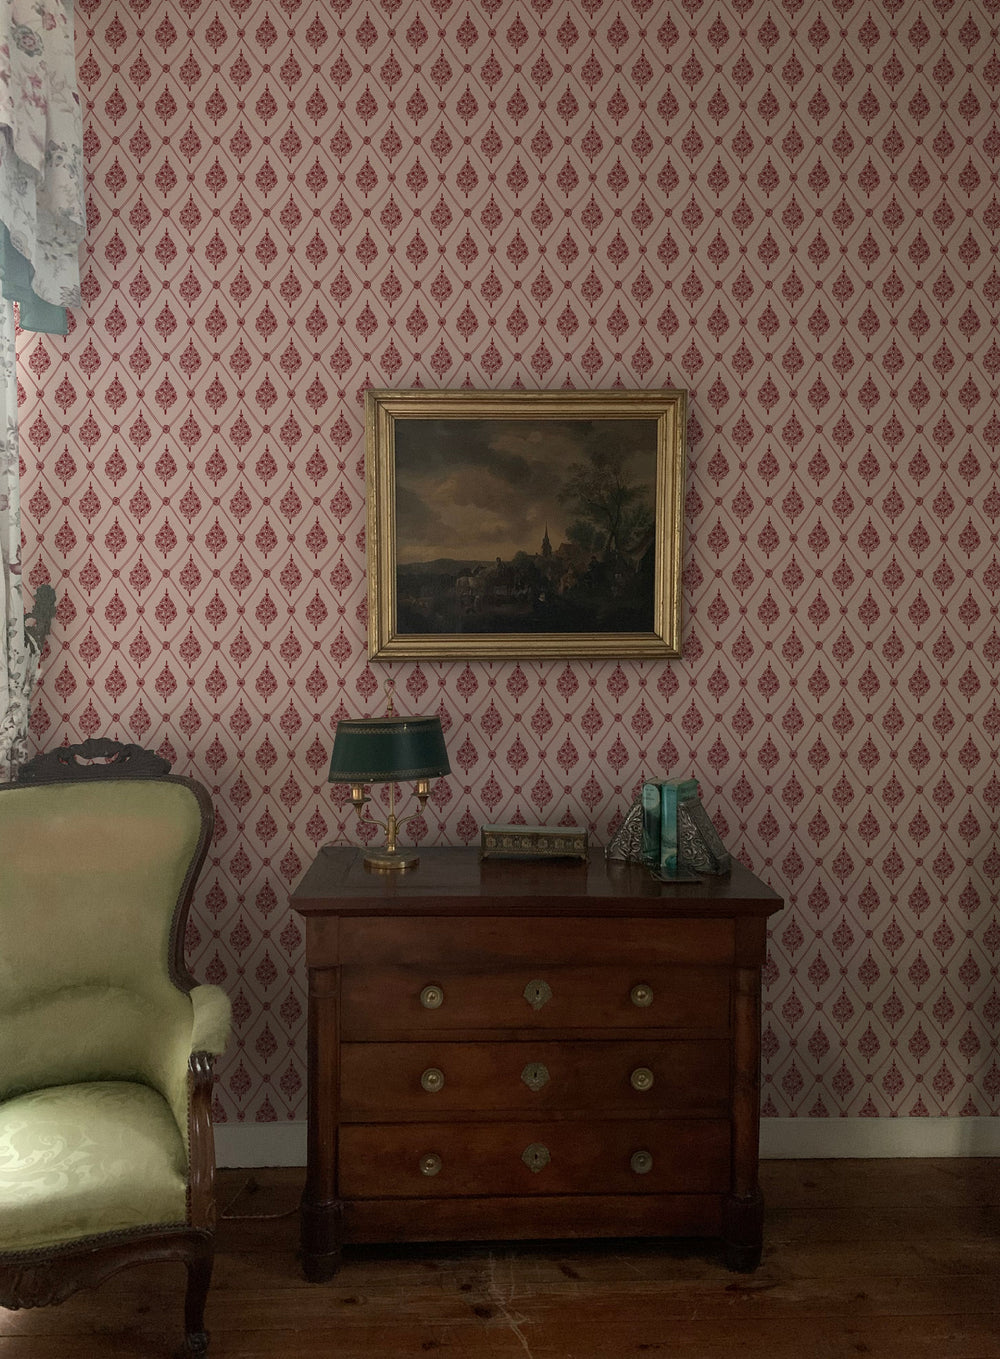 annika-reed-block-printed-wallpaper-agra-pink-red-burgandy-floral-respeated-design-inspired-by-taj-mahal-bedroom